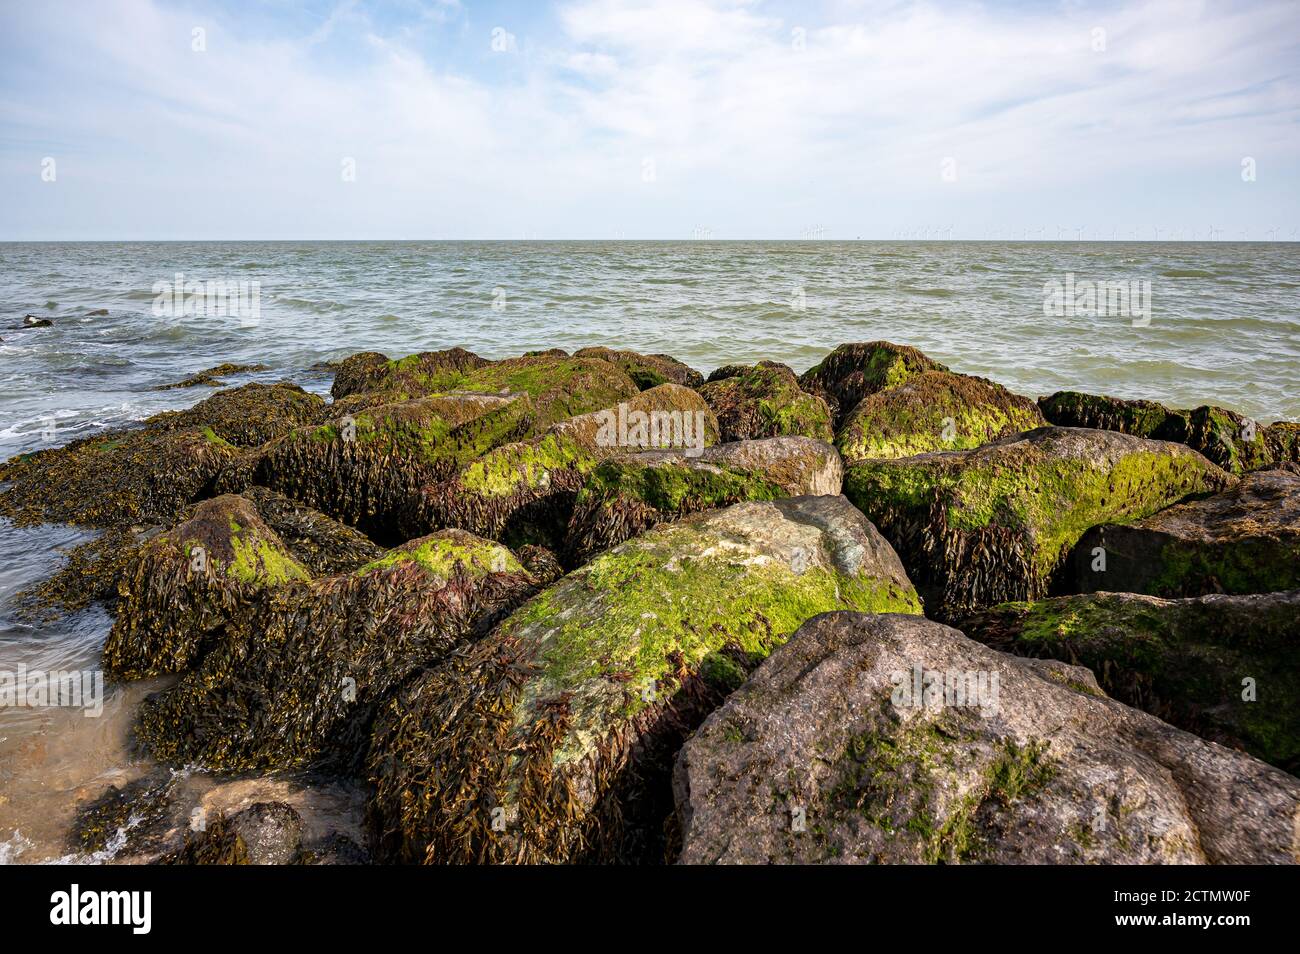 Coastal rocks covered with bladderwrack, Fucus vesiculosus, and Blidingia minima green seaweed Stock Photo